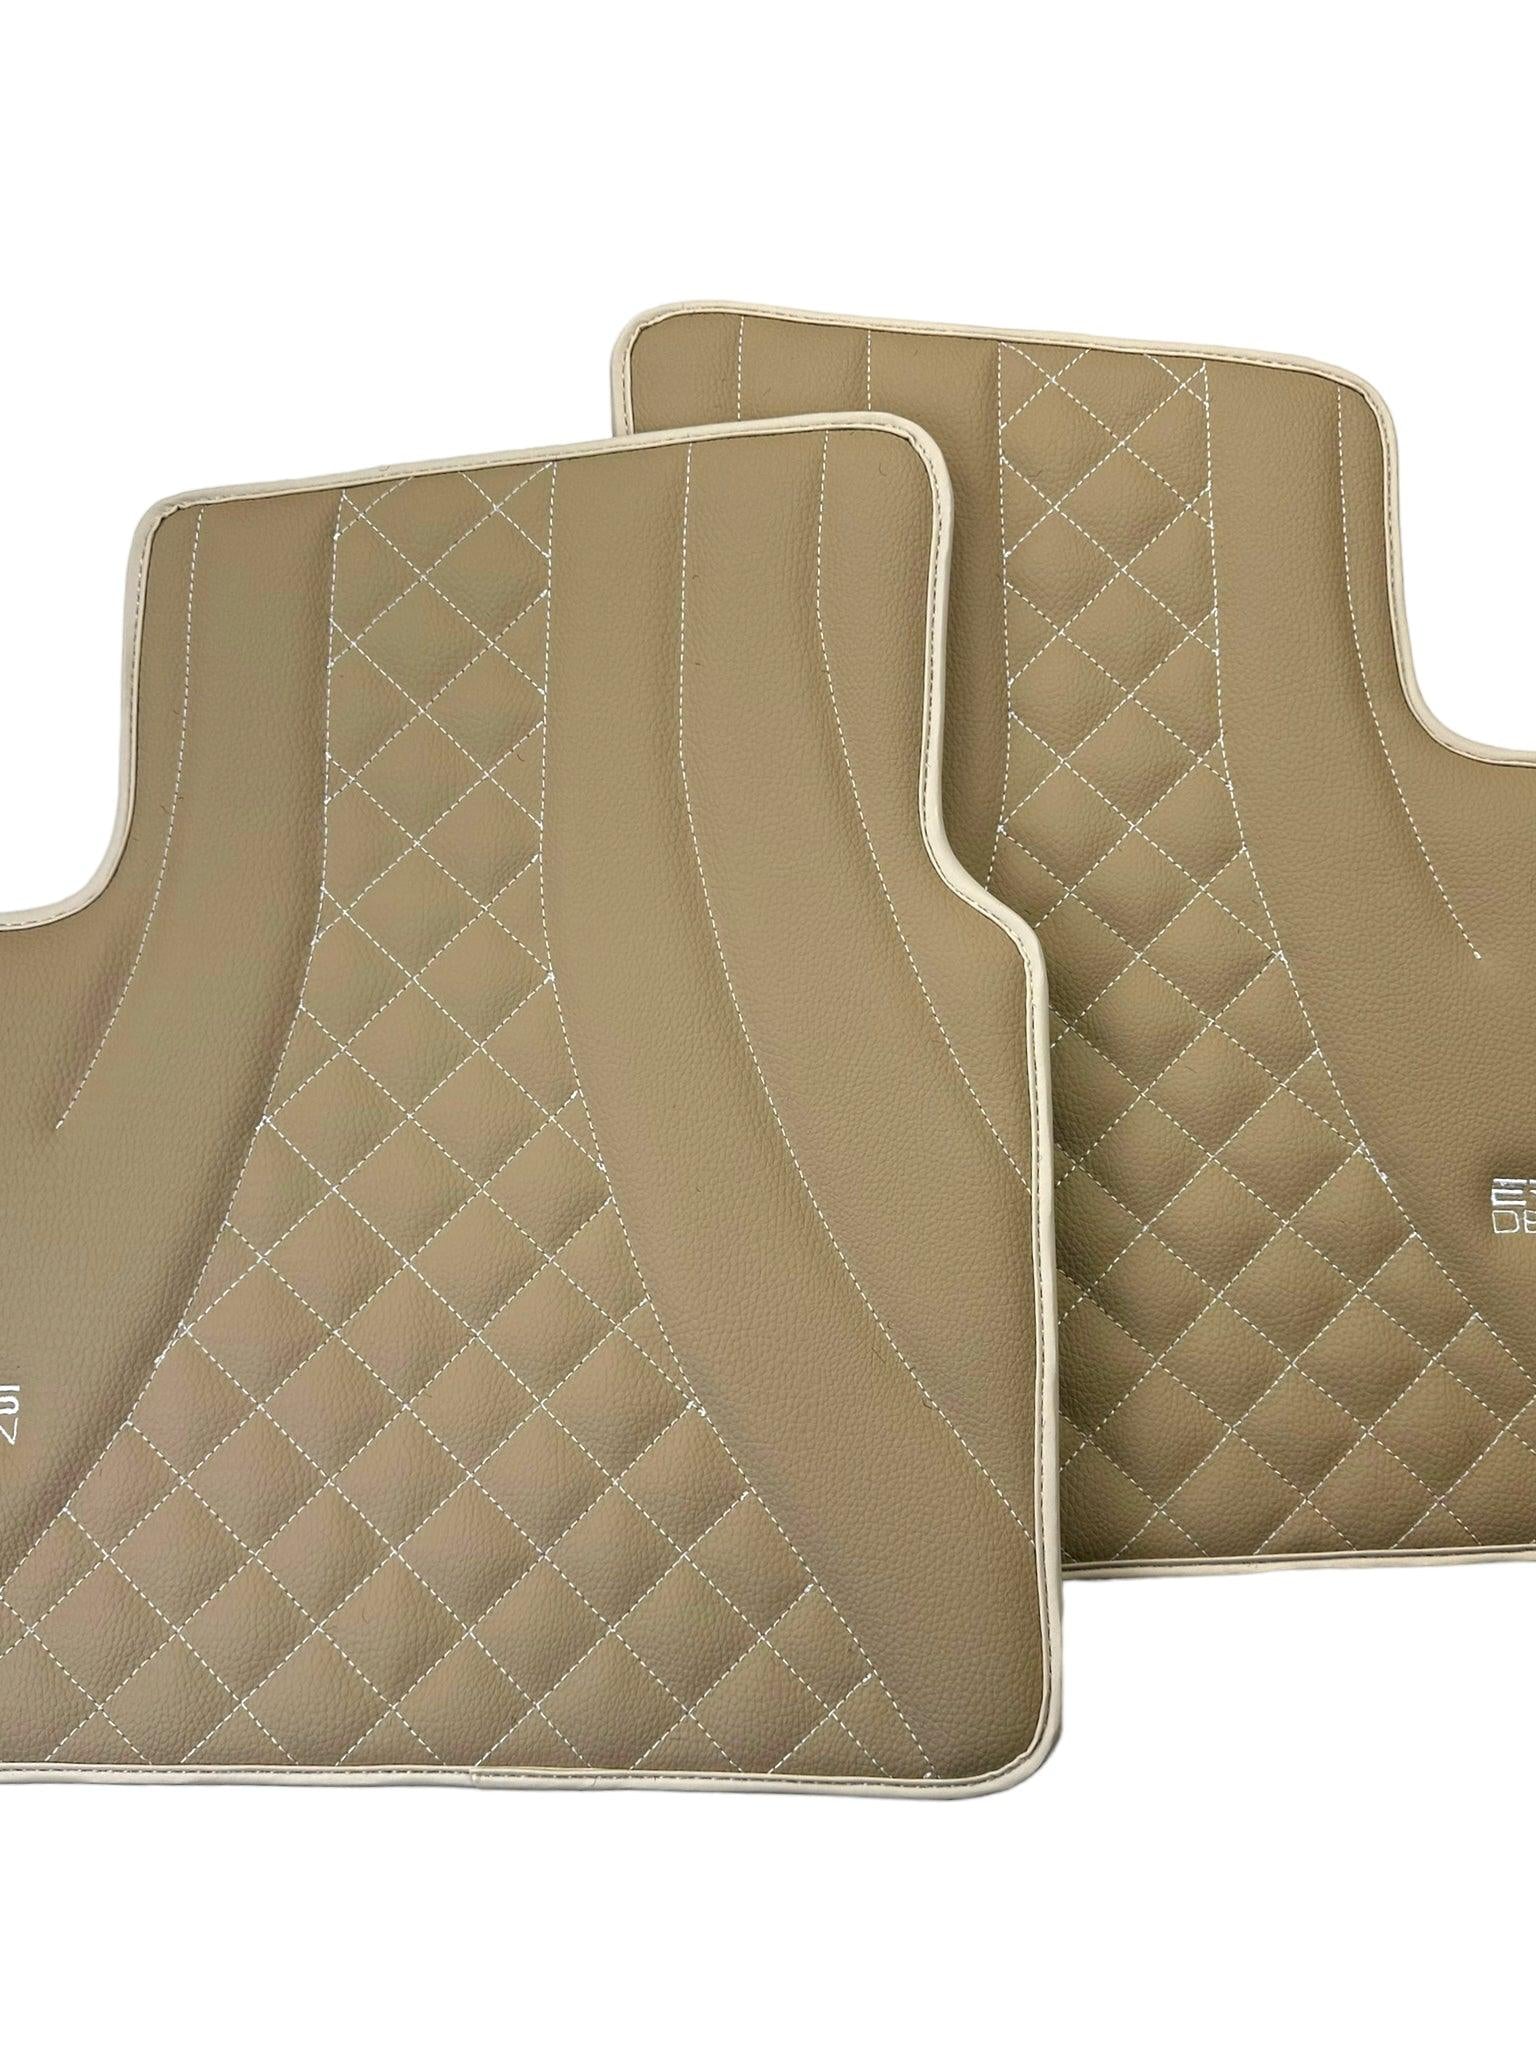 Beige Leather Floor Mats for Mercedes-Benz W463 (2008-2018) ER56 Design